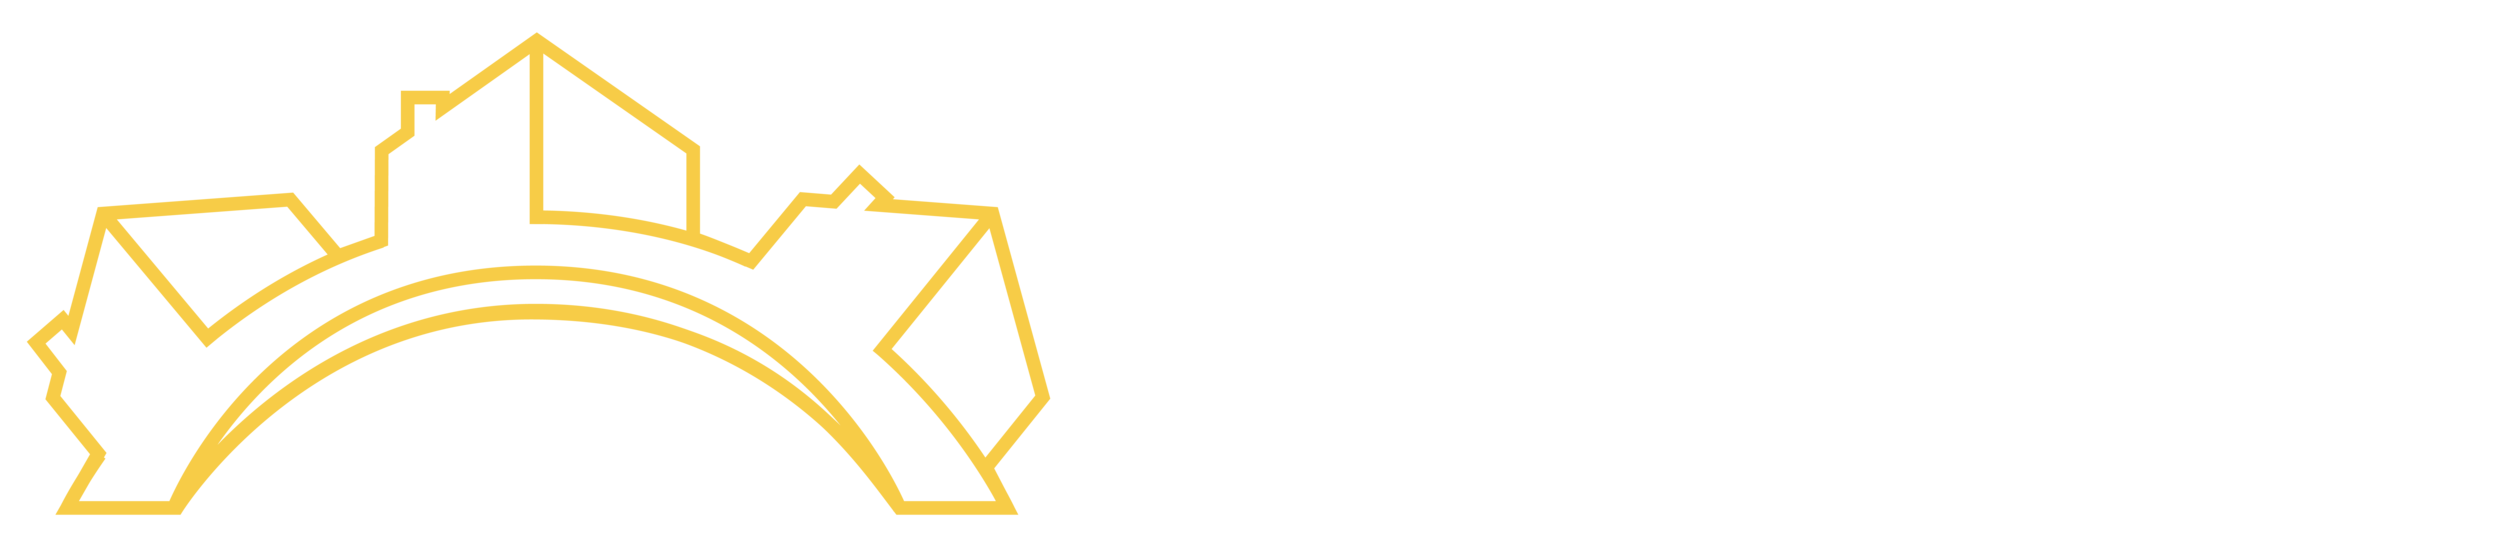 The COG CORPORATION